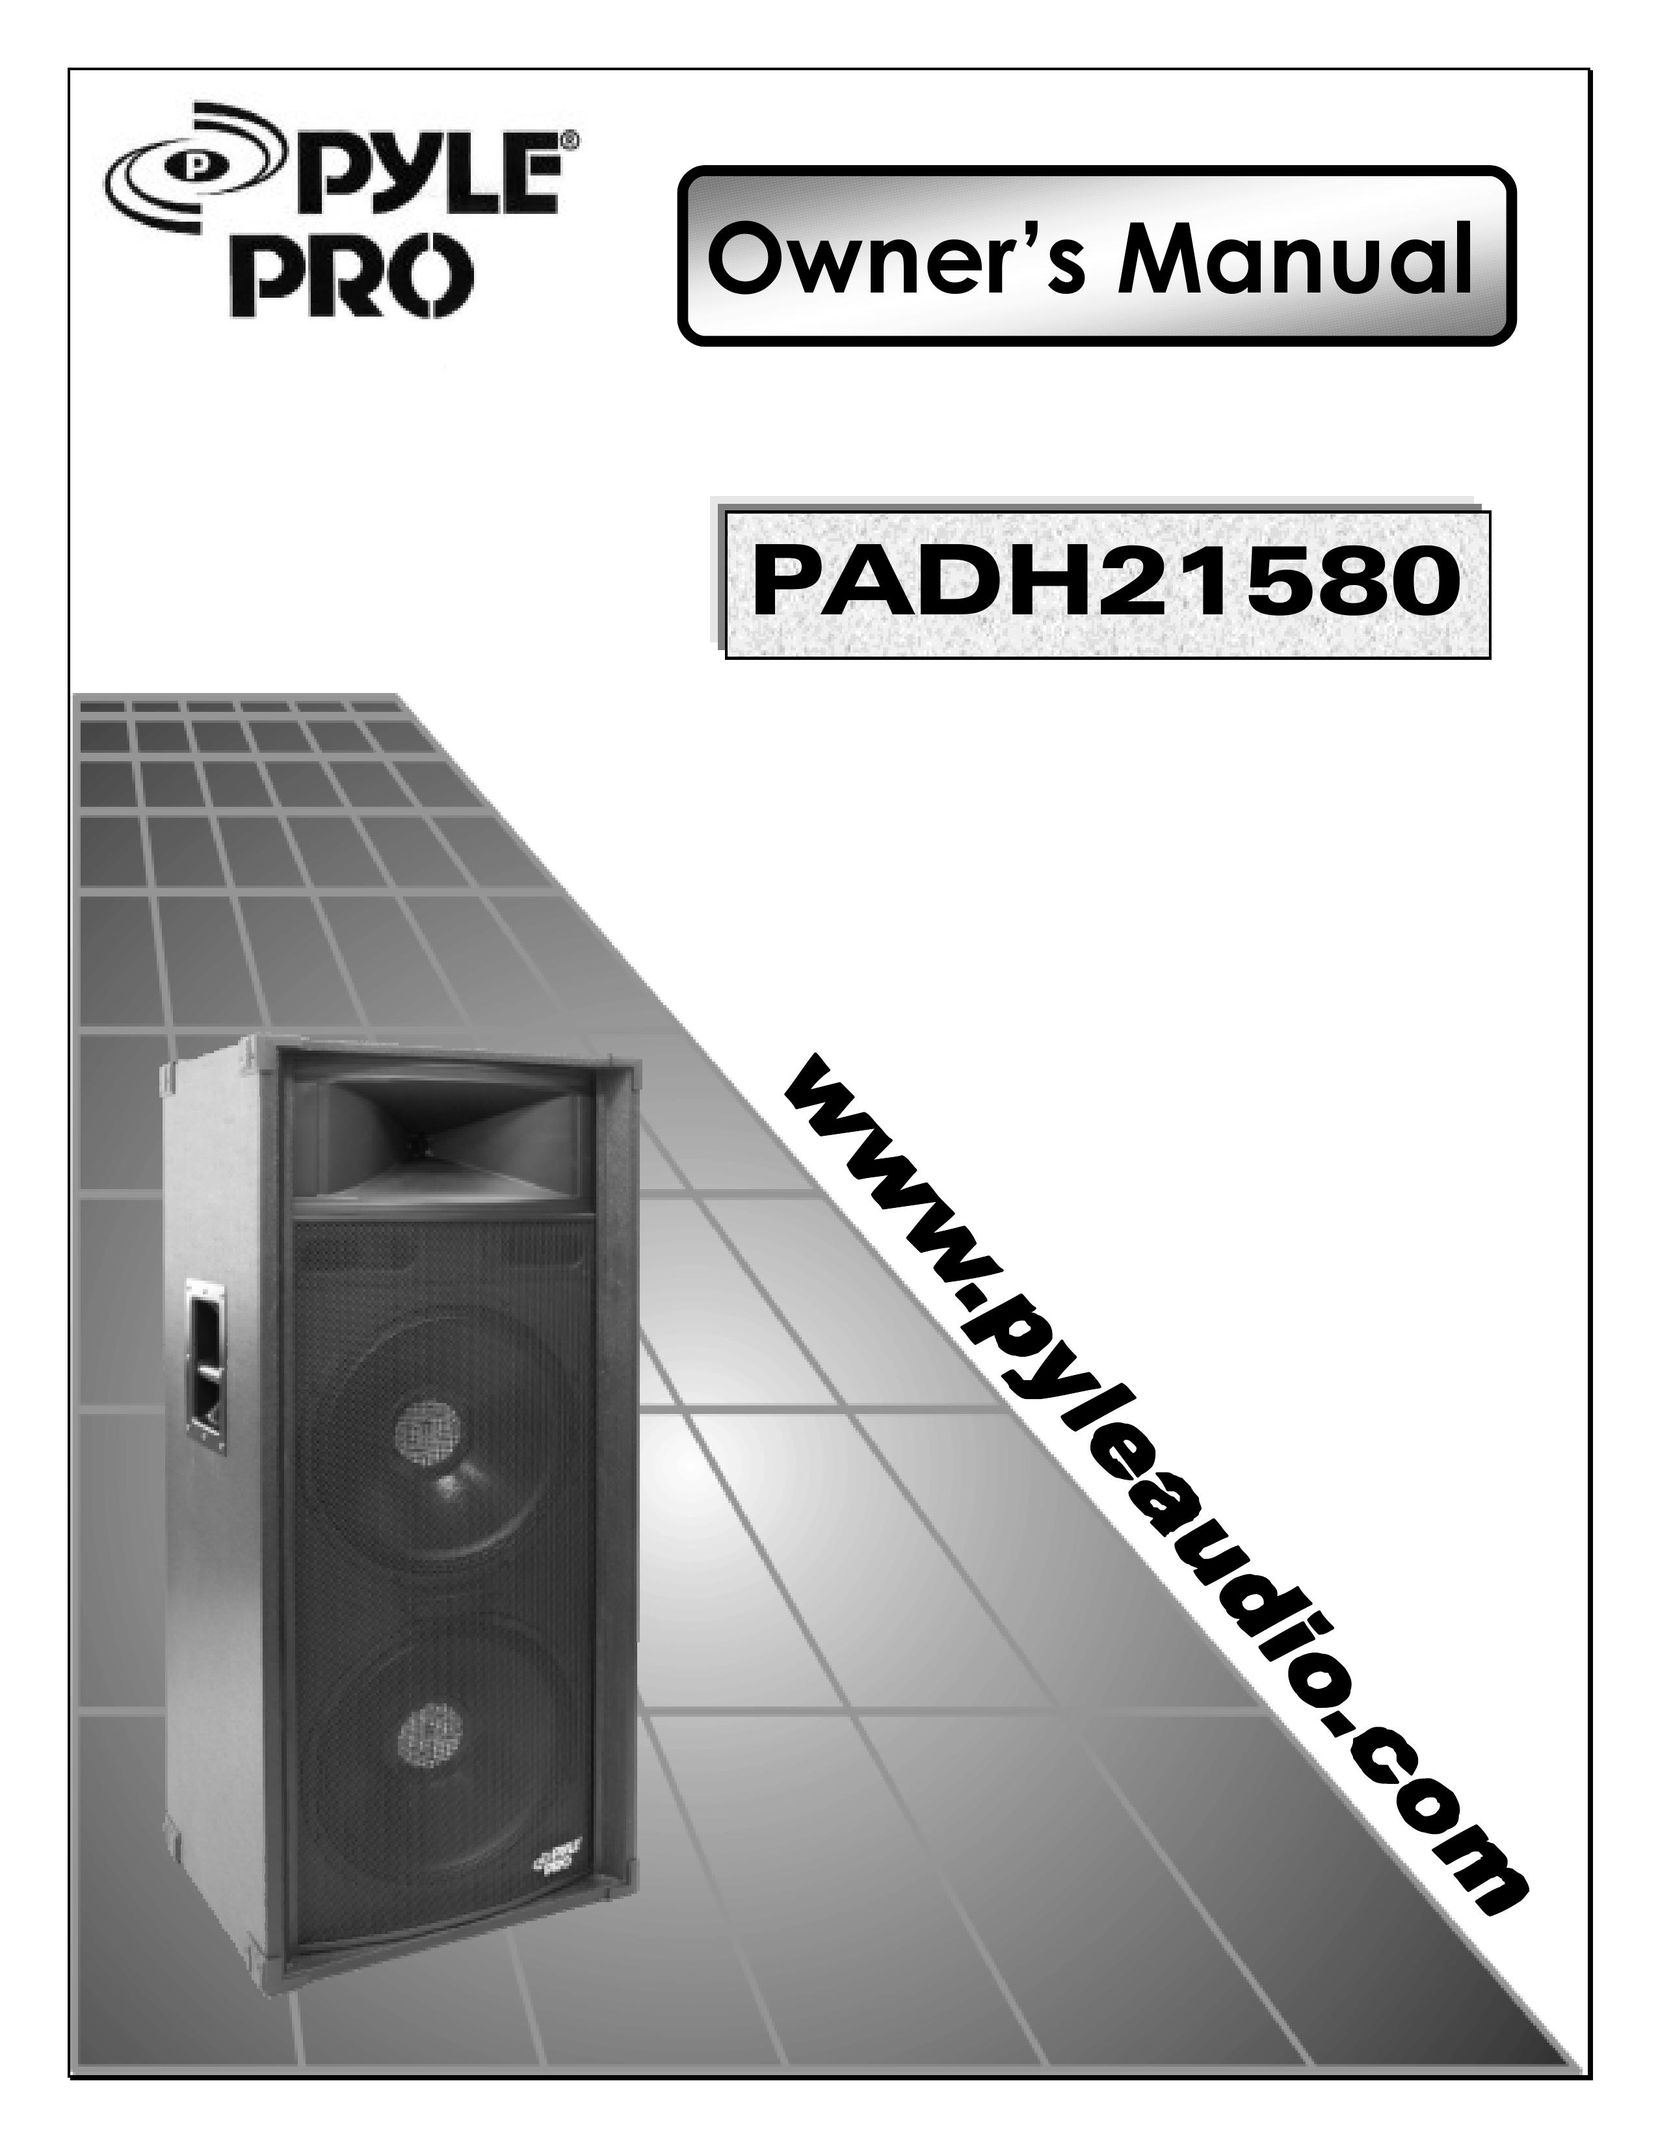 PYLE Audio PADH21580 Portable Speaker User Manual